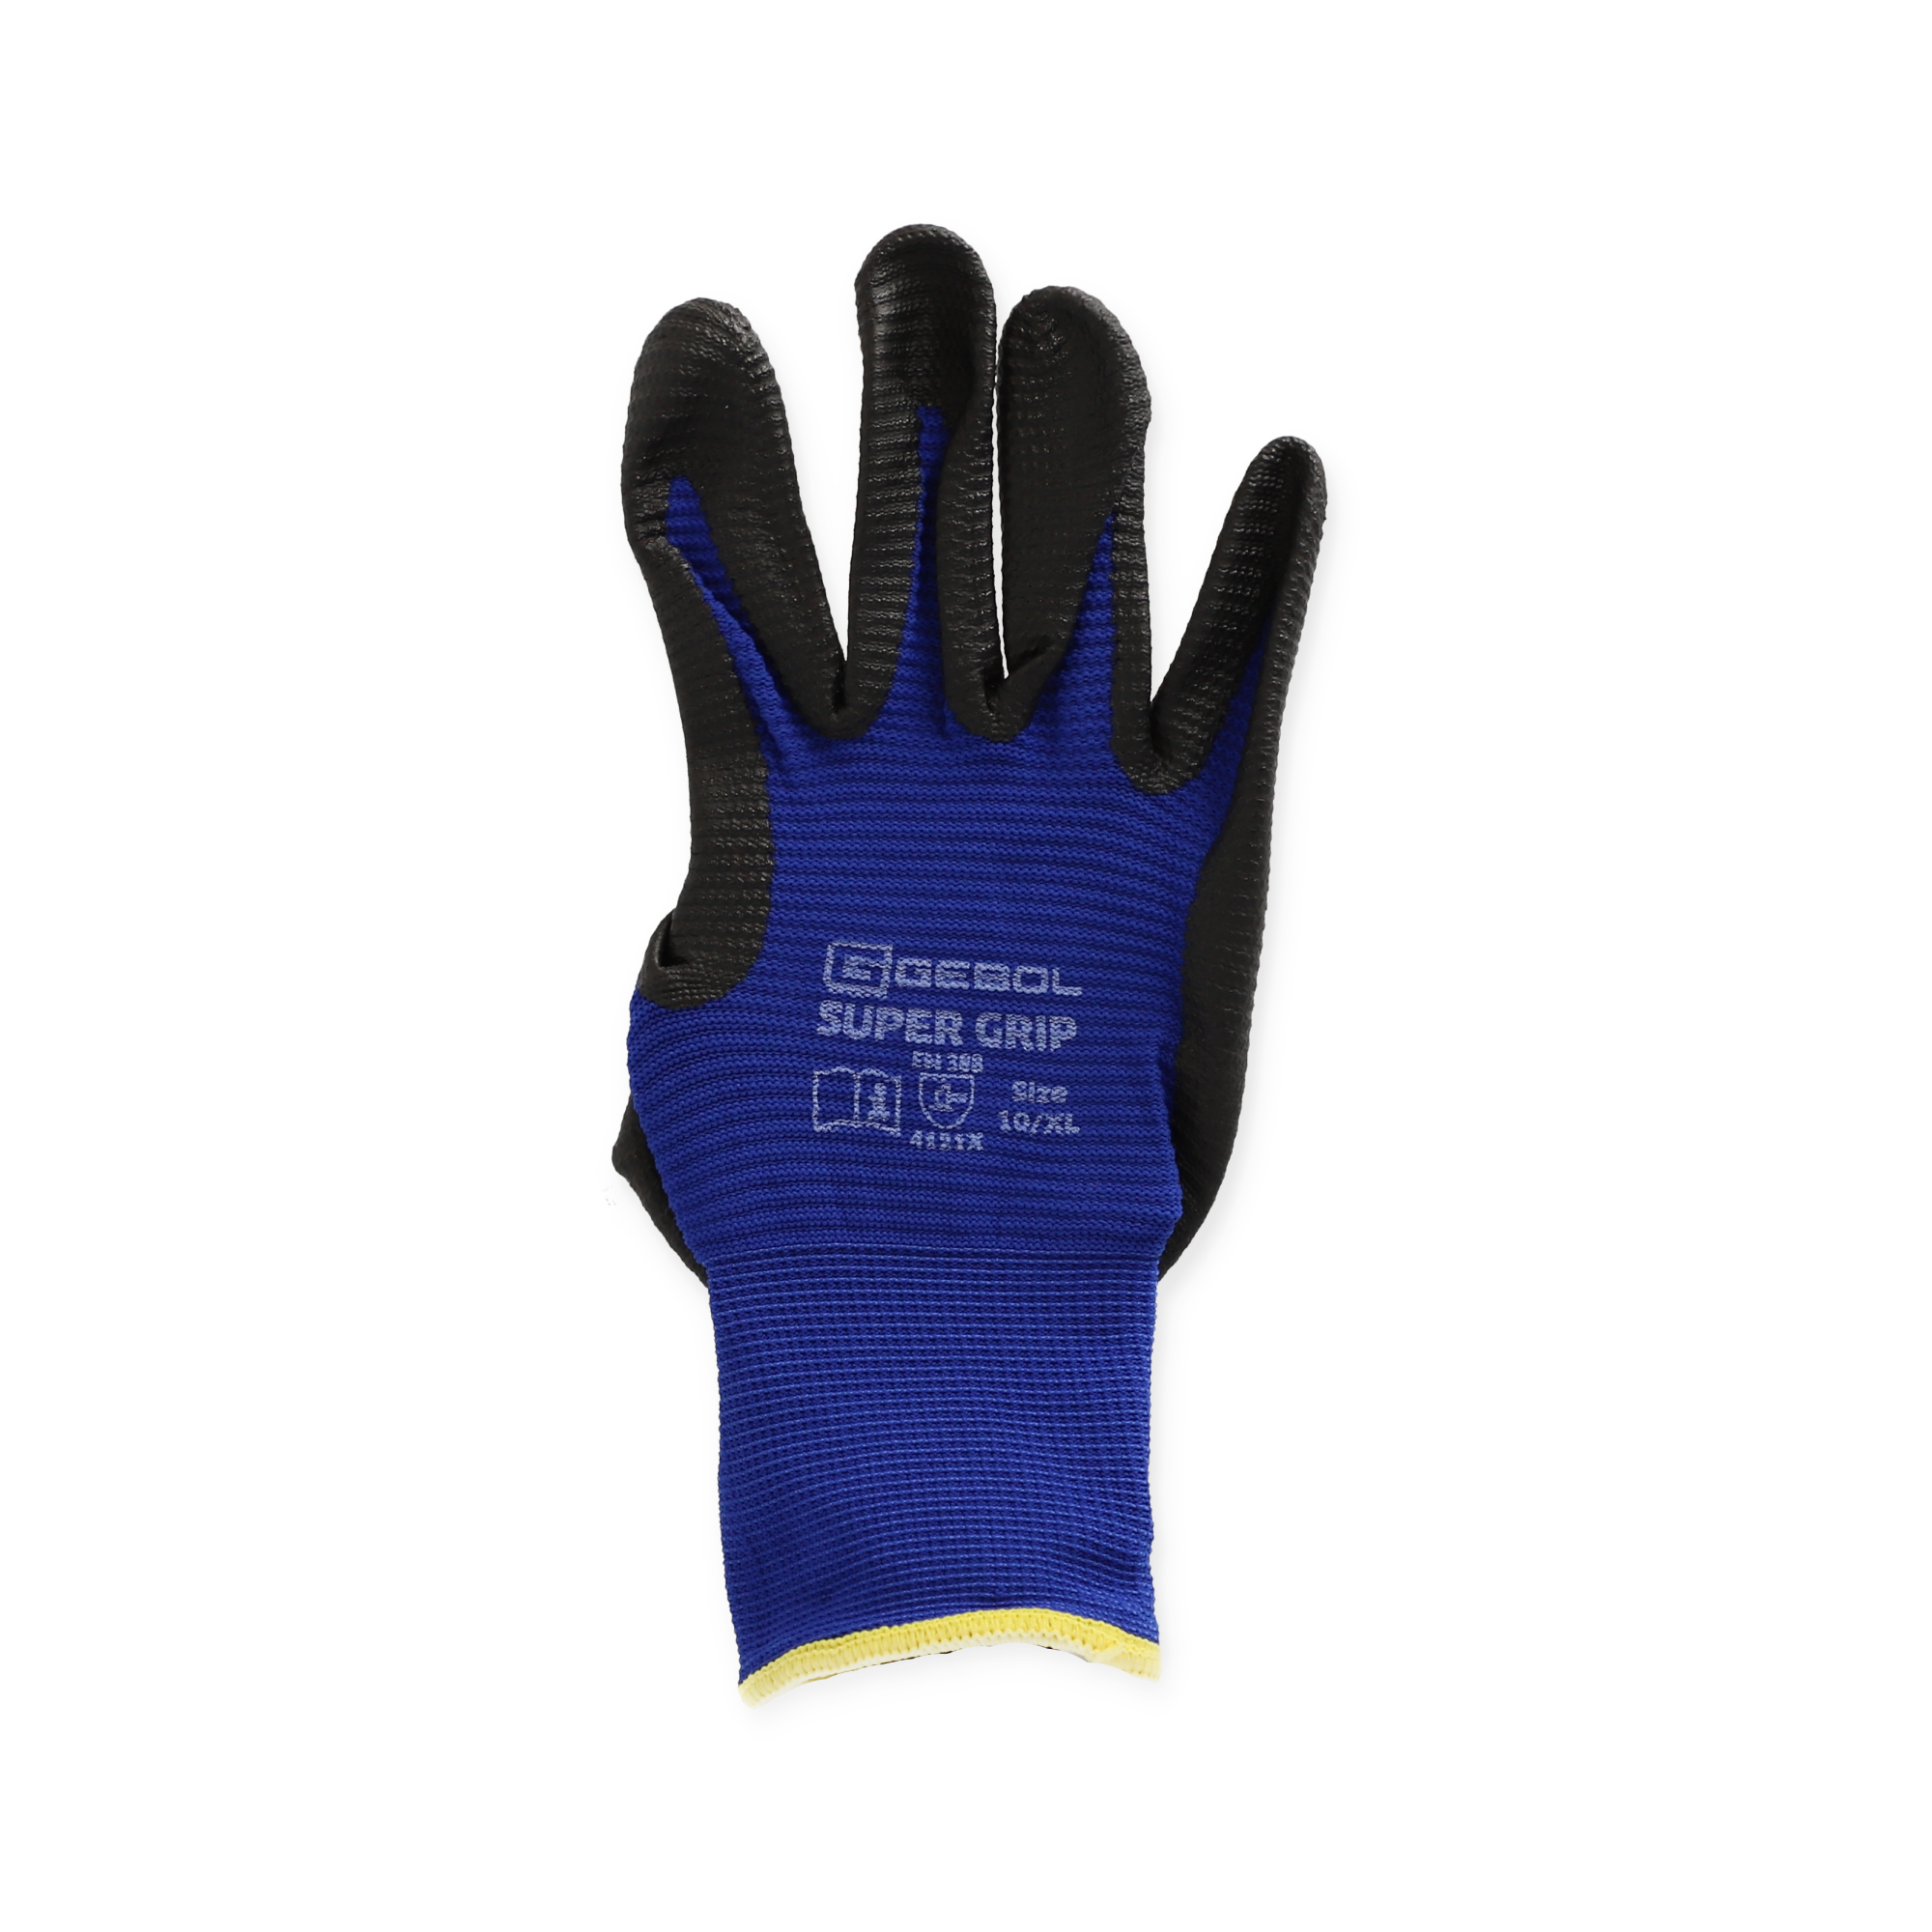 Handschuhe 'Super Grip' blau Gr. 10 + product picture